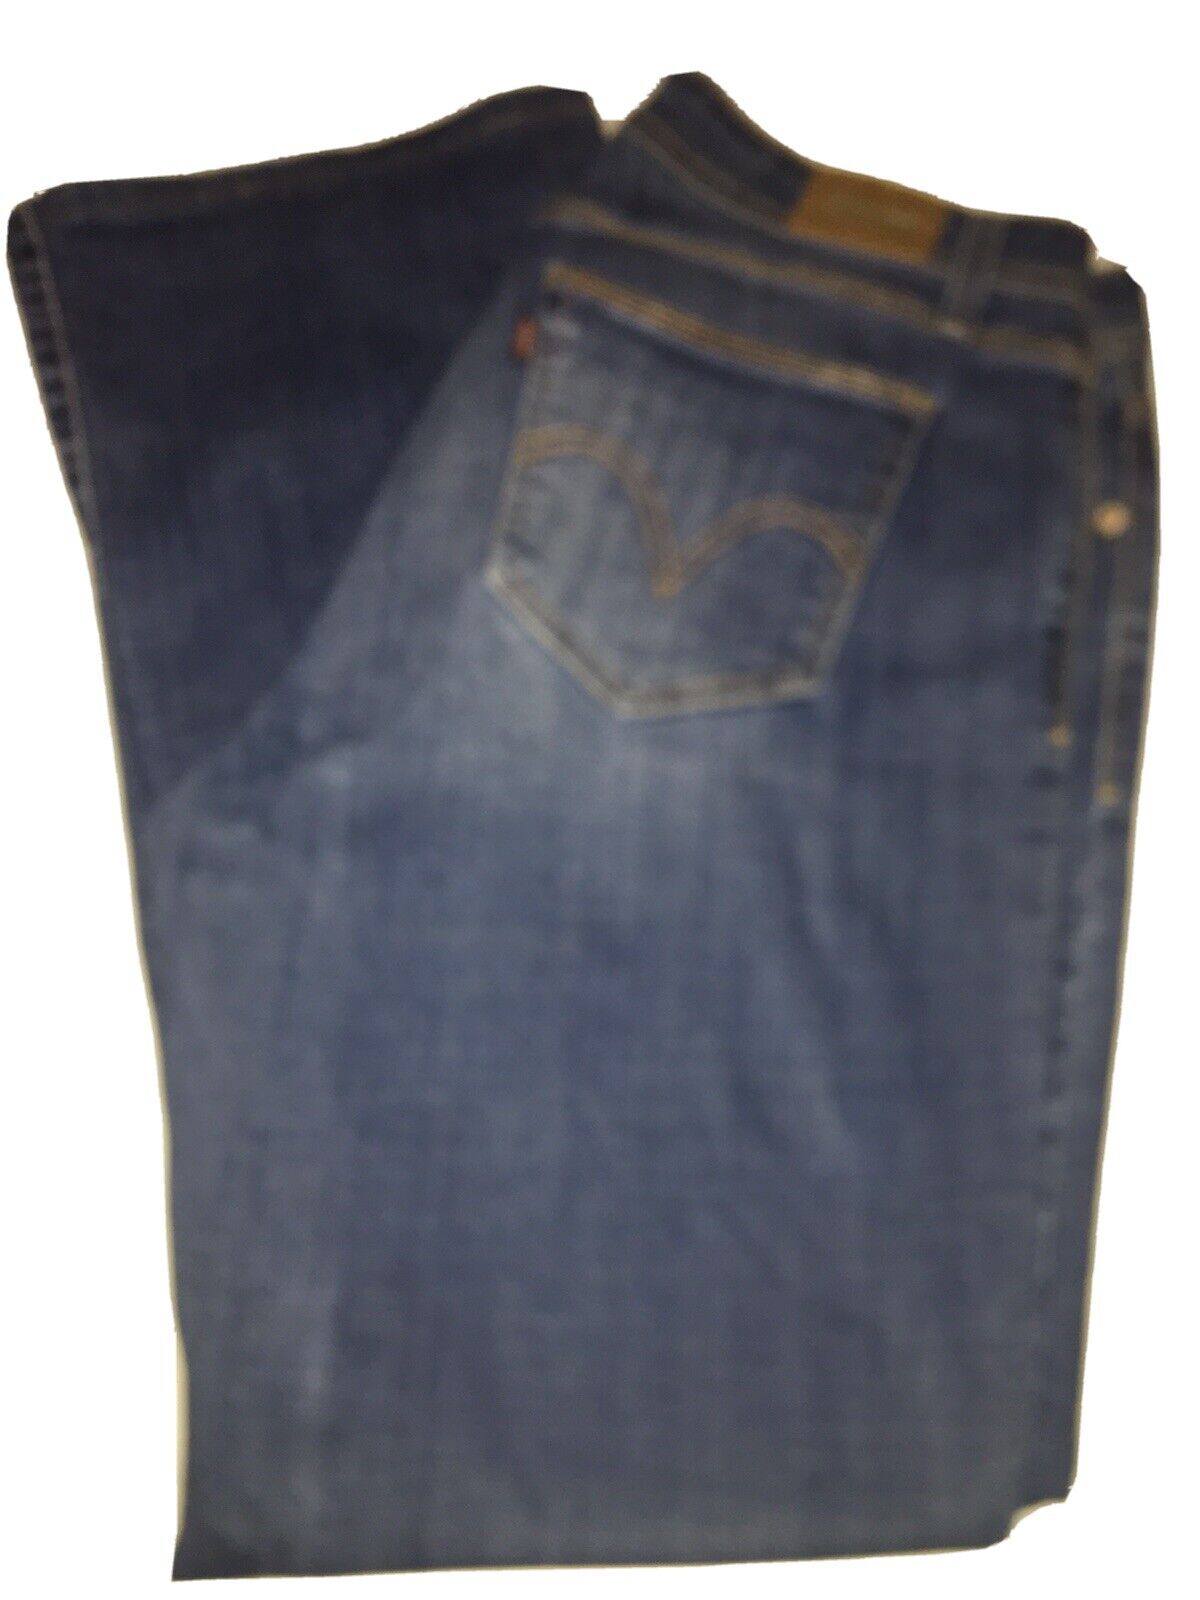 Levis 529 Curvy Bootcut Jeans SIZE 14 -Medium and Dark Wash | eBay